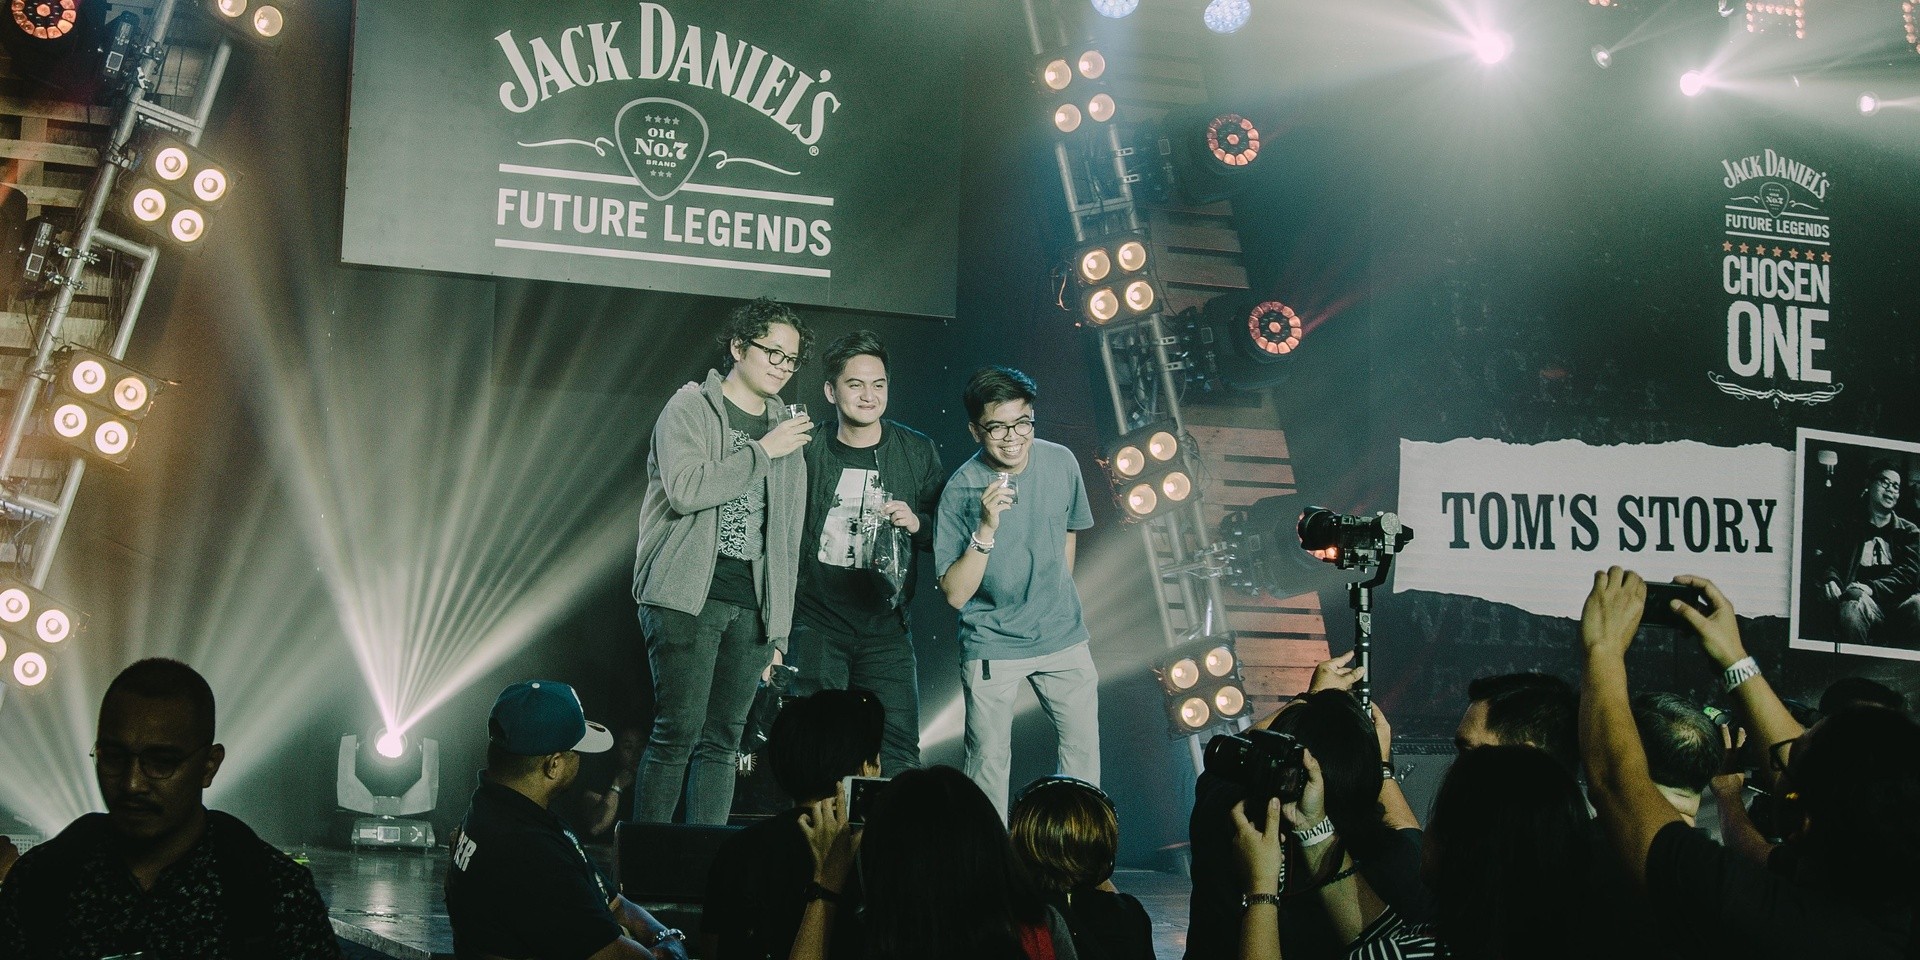 Tom's Story is Jack Daniel's Future Legends Chosen One 